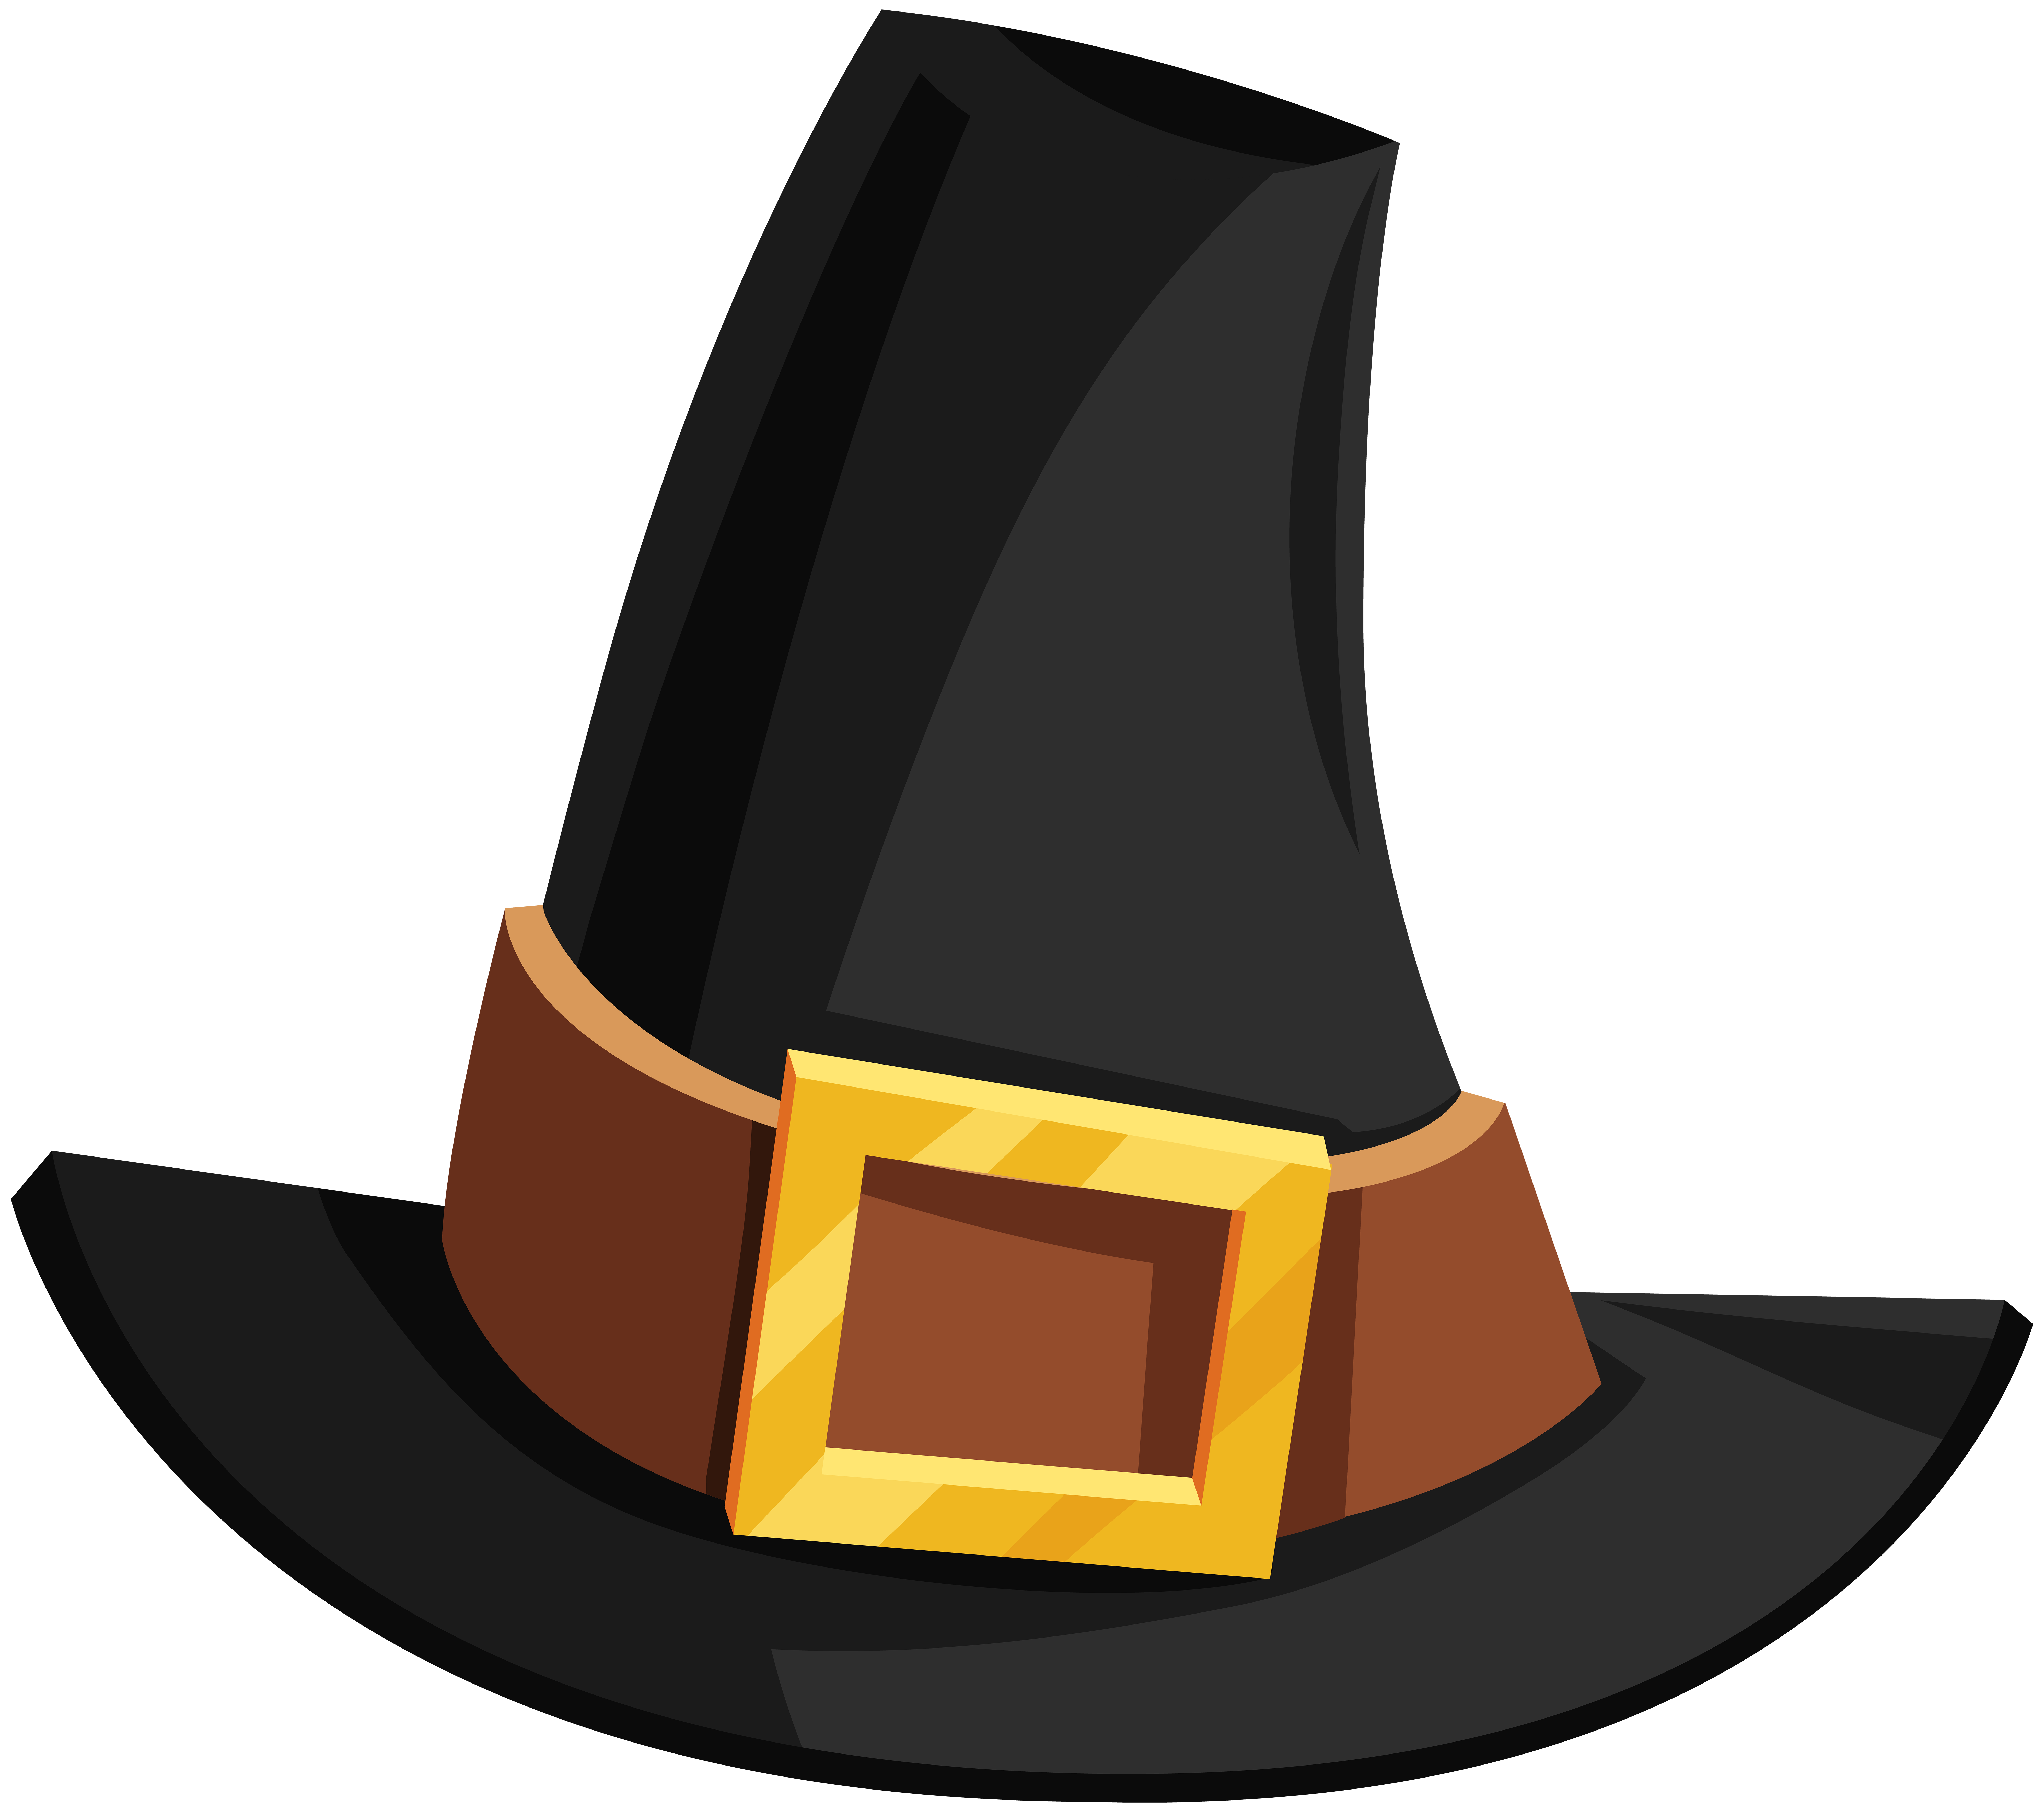 Pilgrim's hat Clip art Pilgrim Hat Transparent PNG Image png download